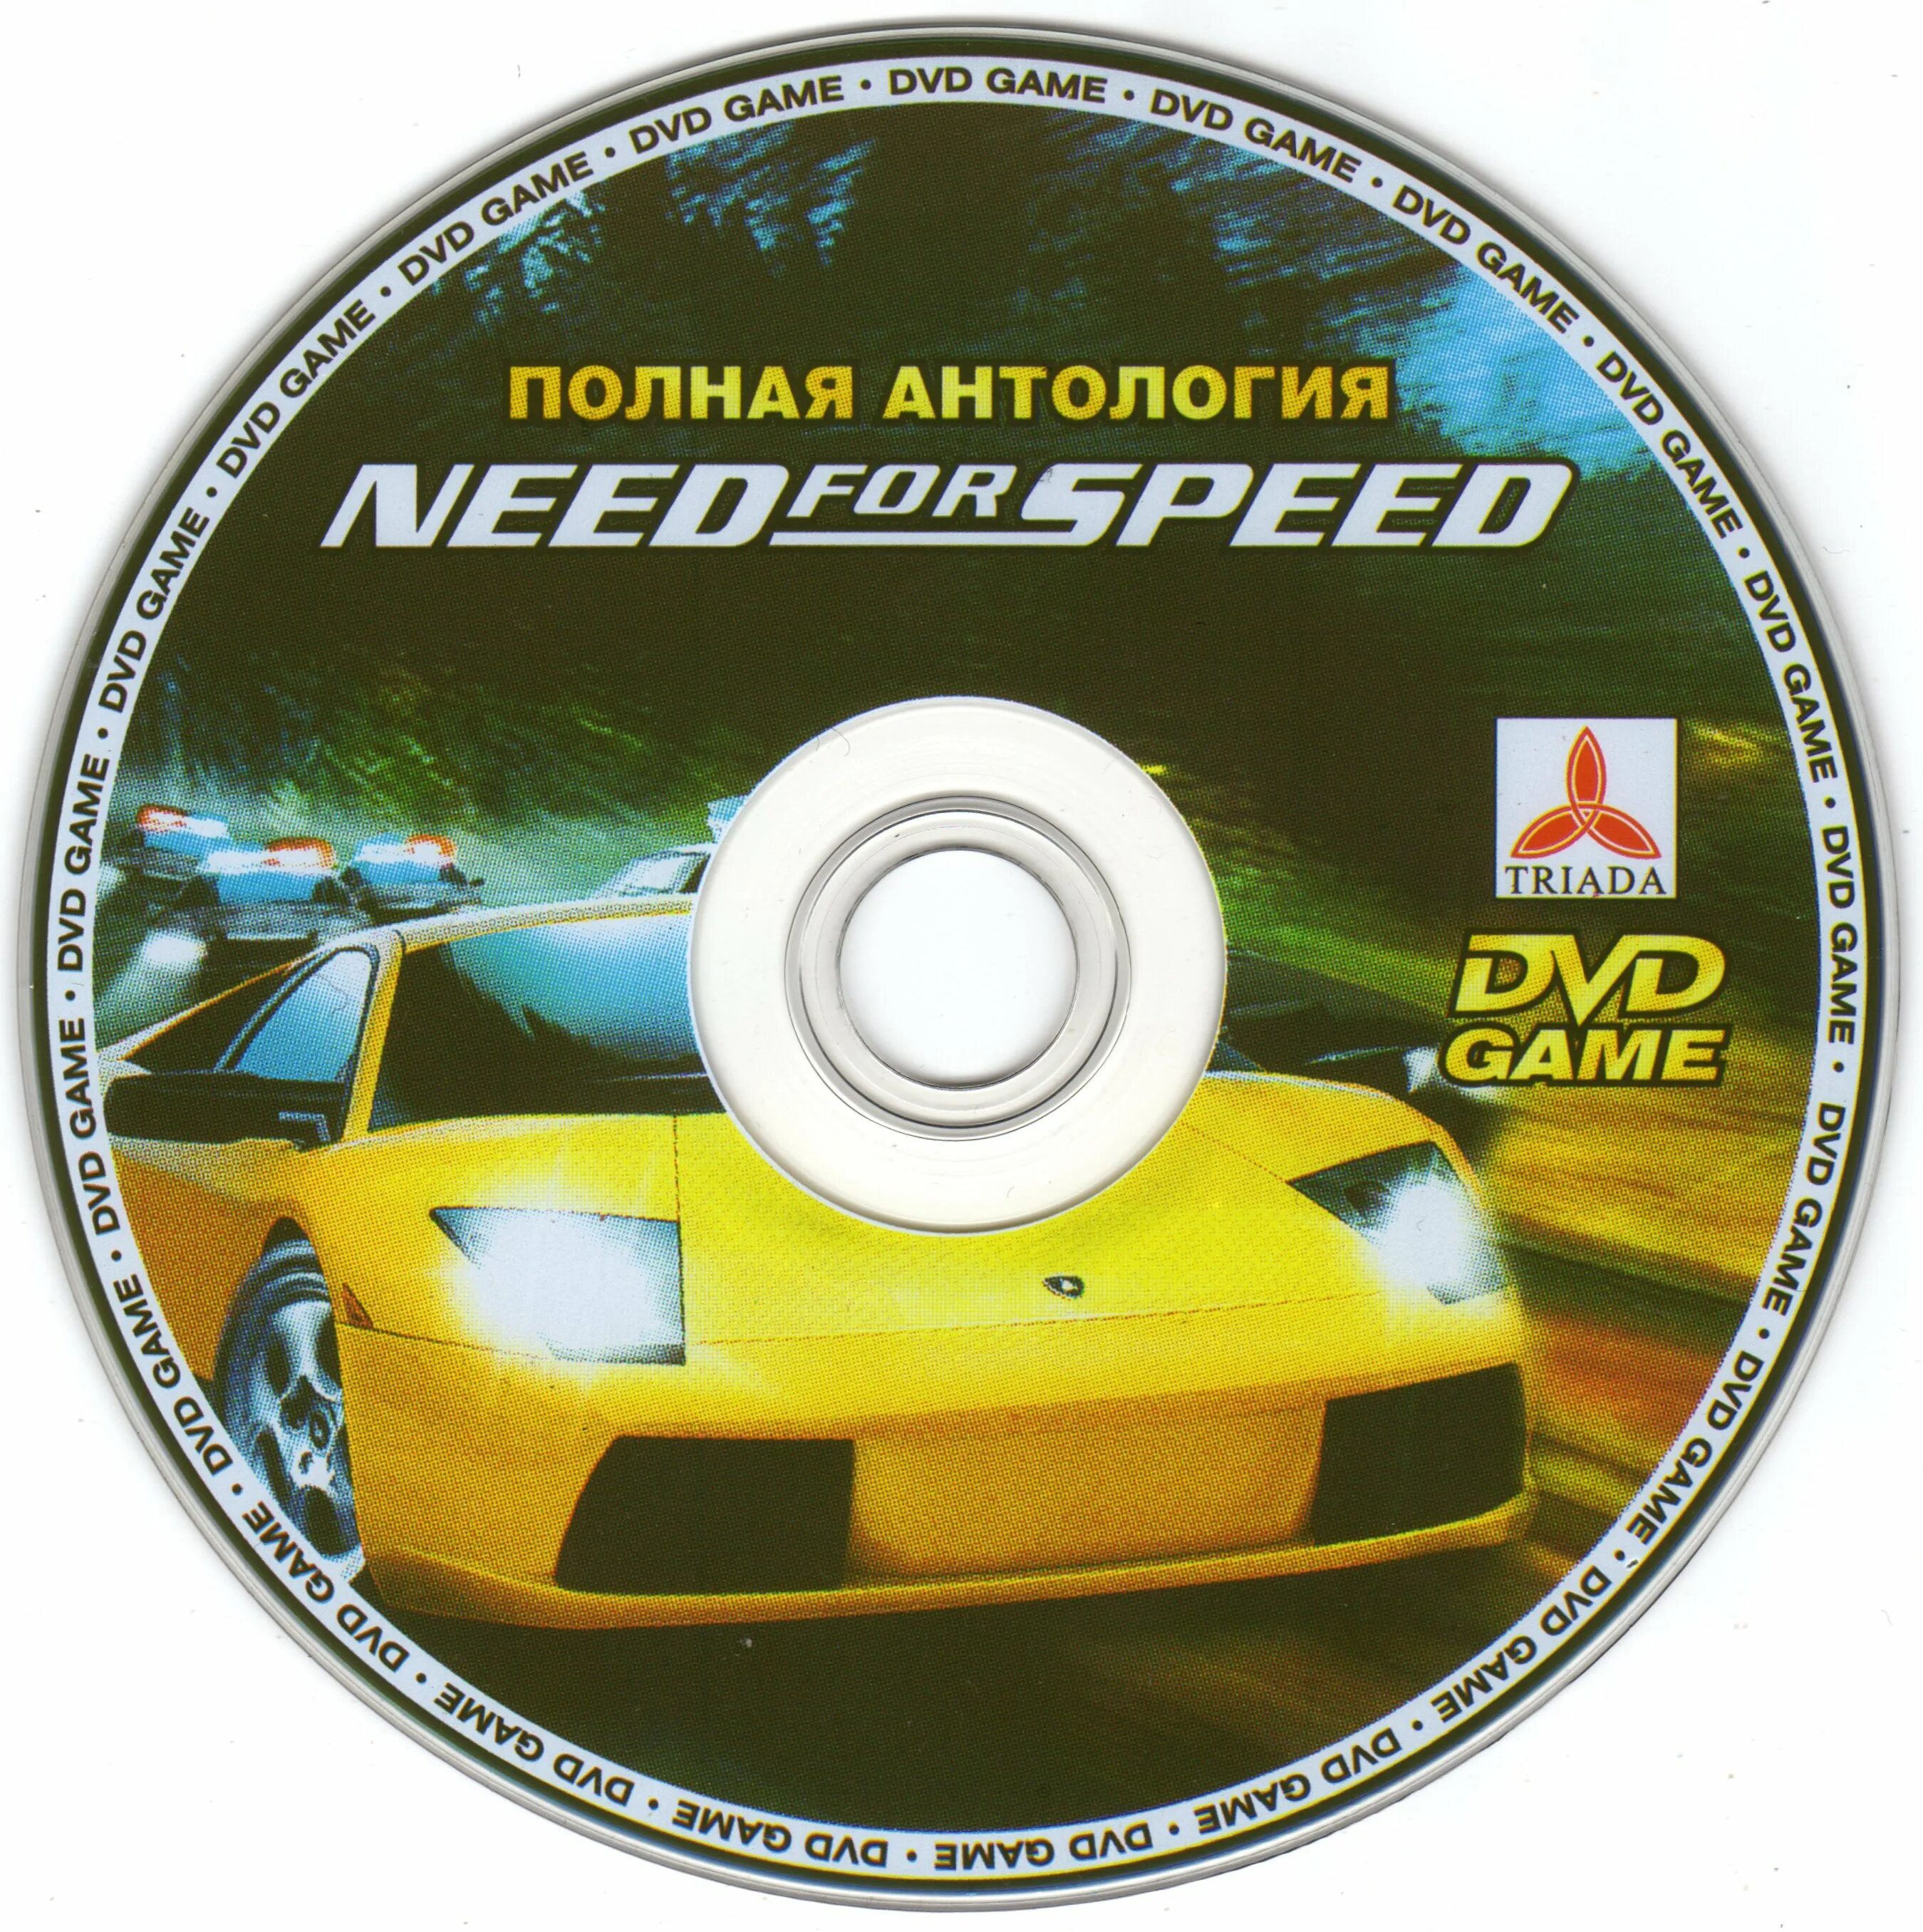 Антология need for Speed двд. Антология need for Speed диск. Need for Speed антология DVD. Need for Speed Золотая коллекция диск. Антология need